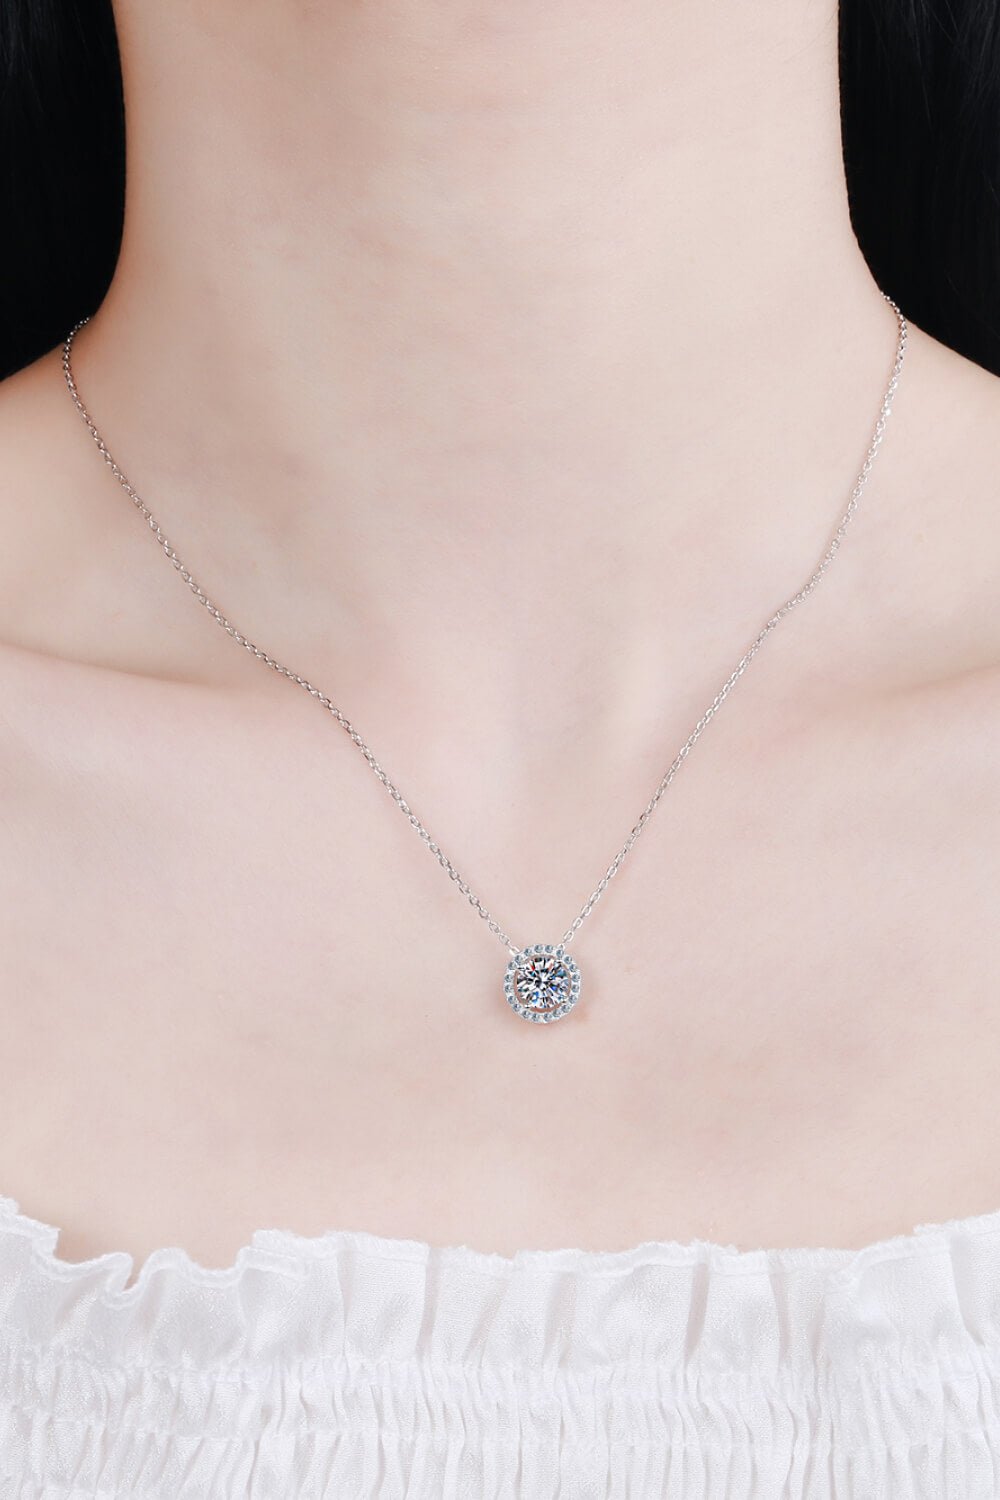 1 Carat Moissanite Round Pendant Women's Chain Necklace